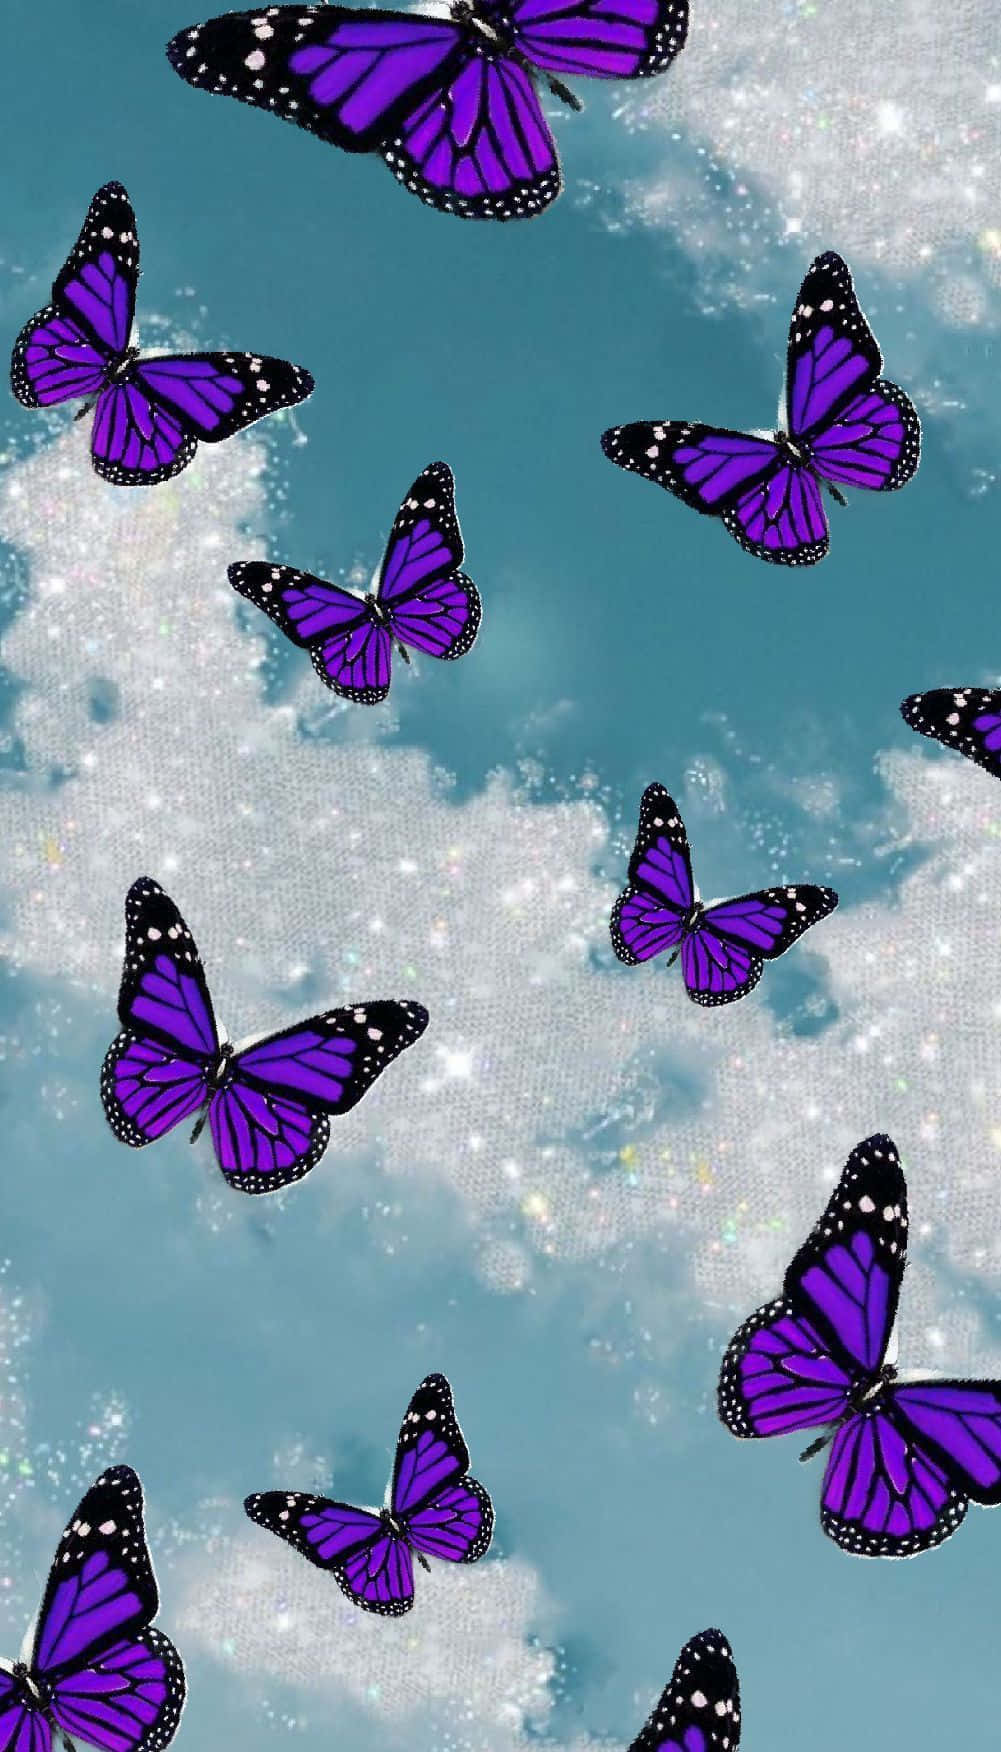 Unlock beauty with the Purple Butterfly iPhone Wallpaper